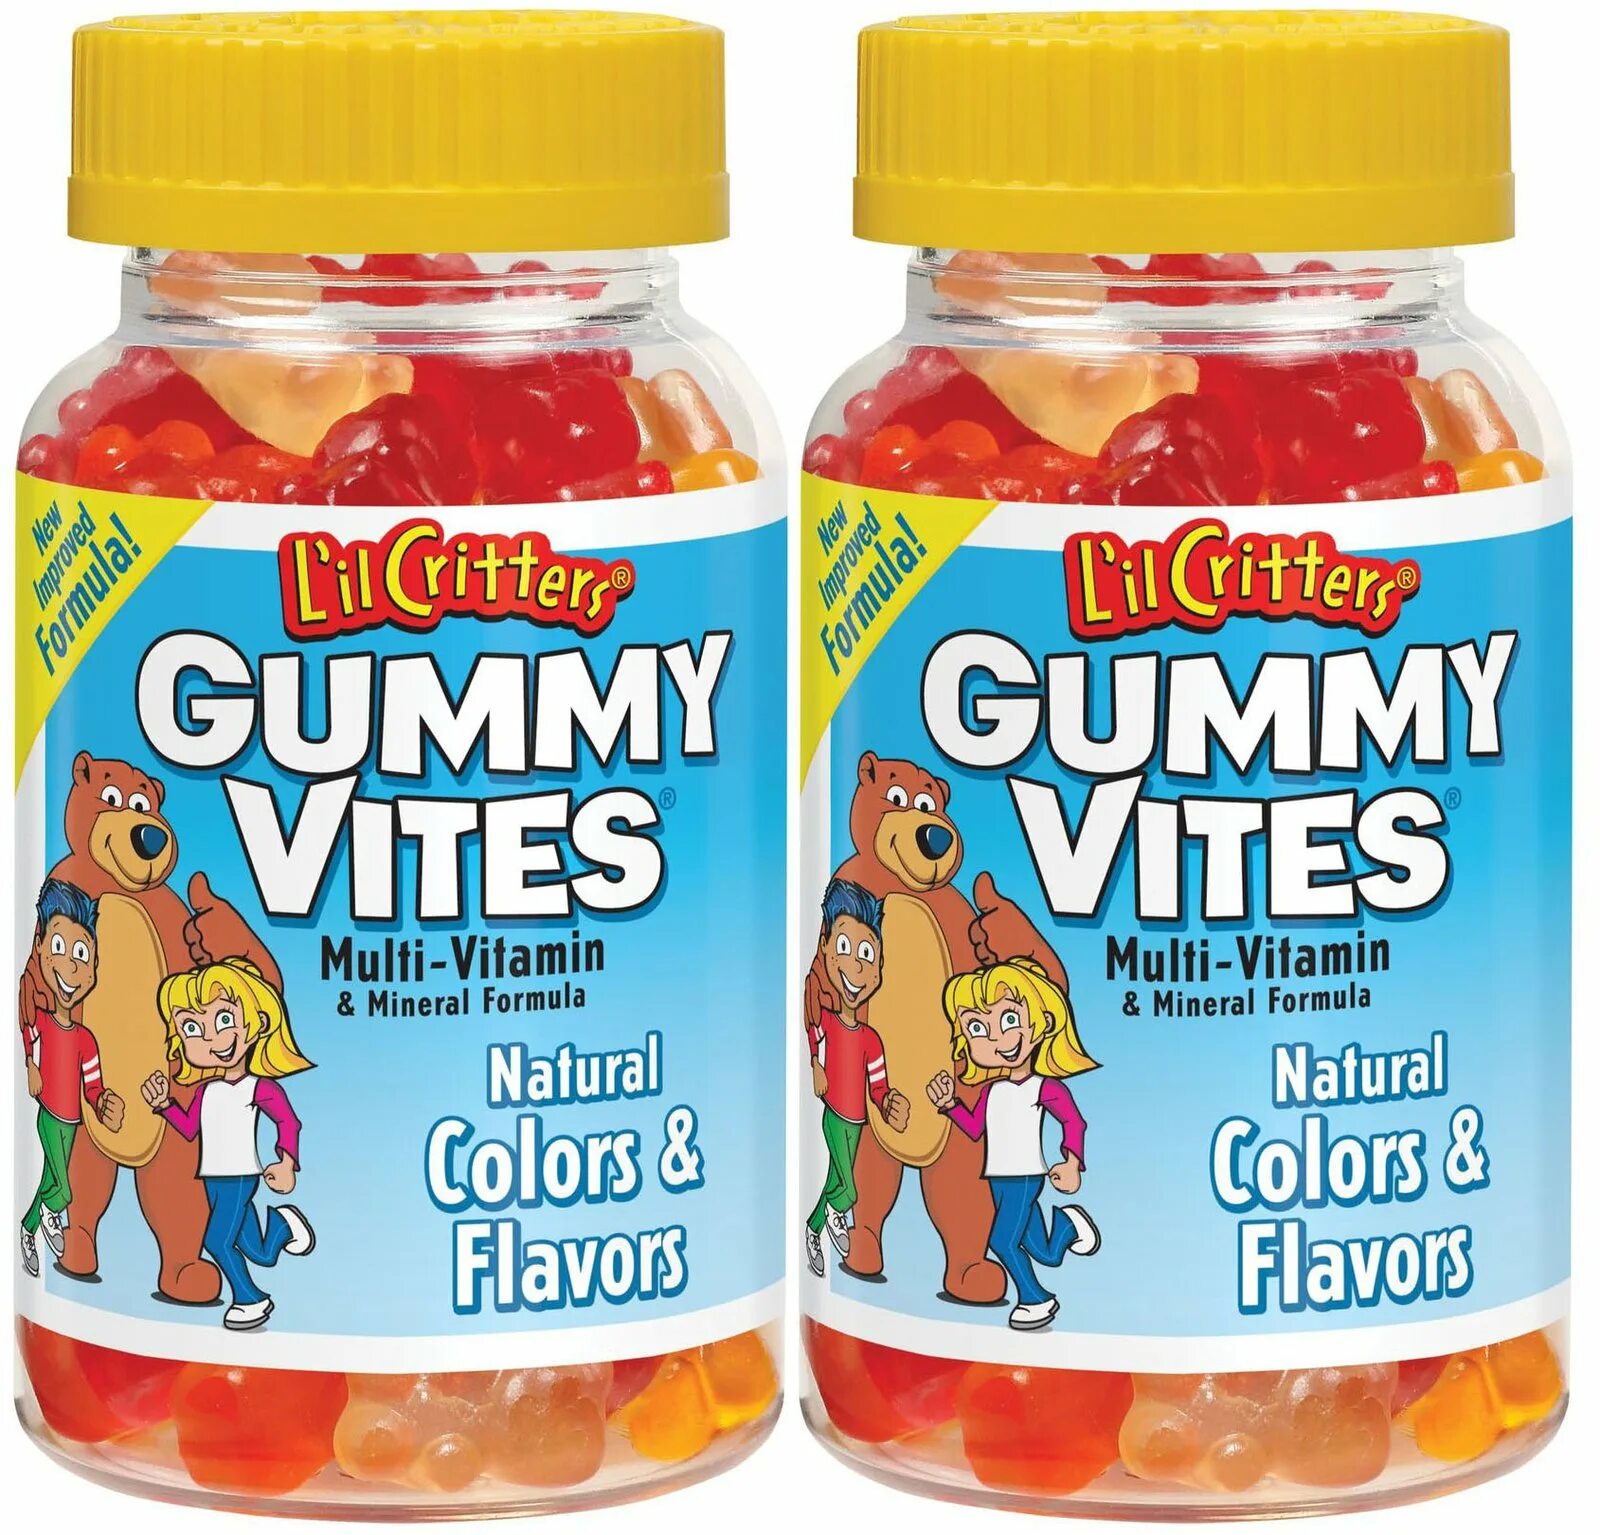 Vitamin gummies. Gummies витамины. Американские витамины. Gummy Vitamins. Vitime Gummy.